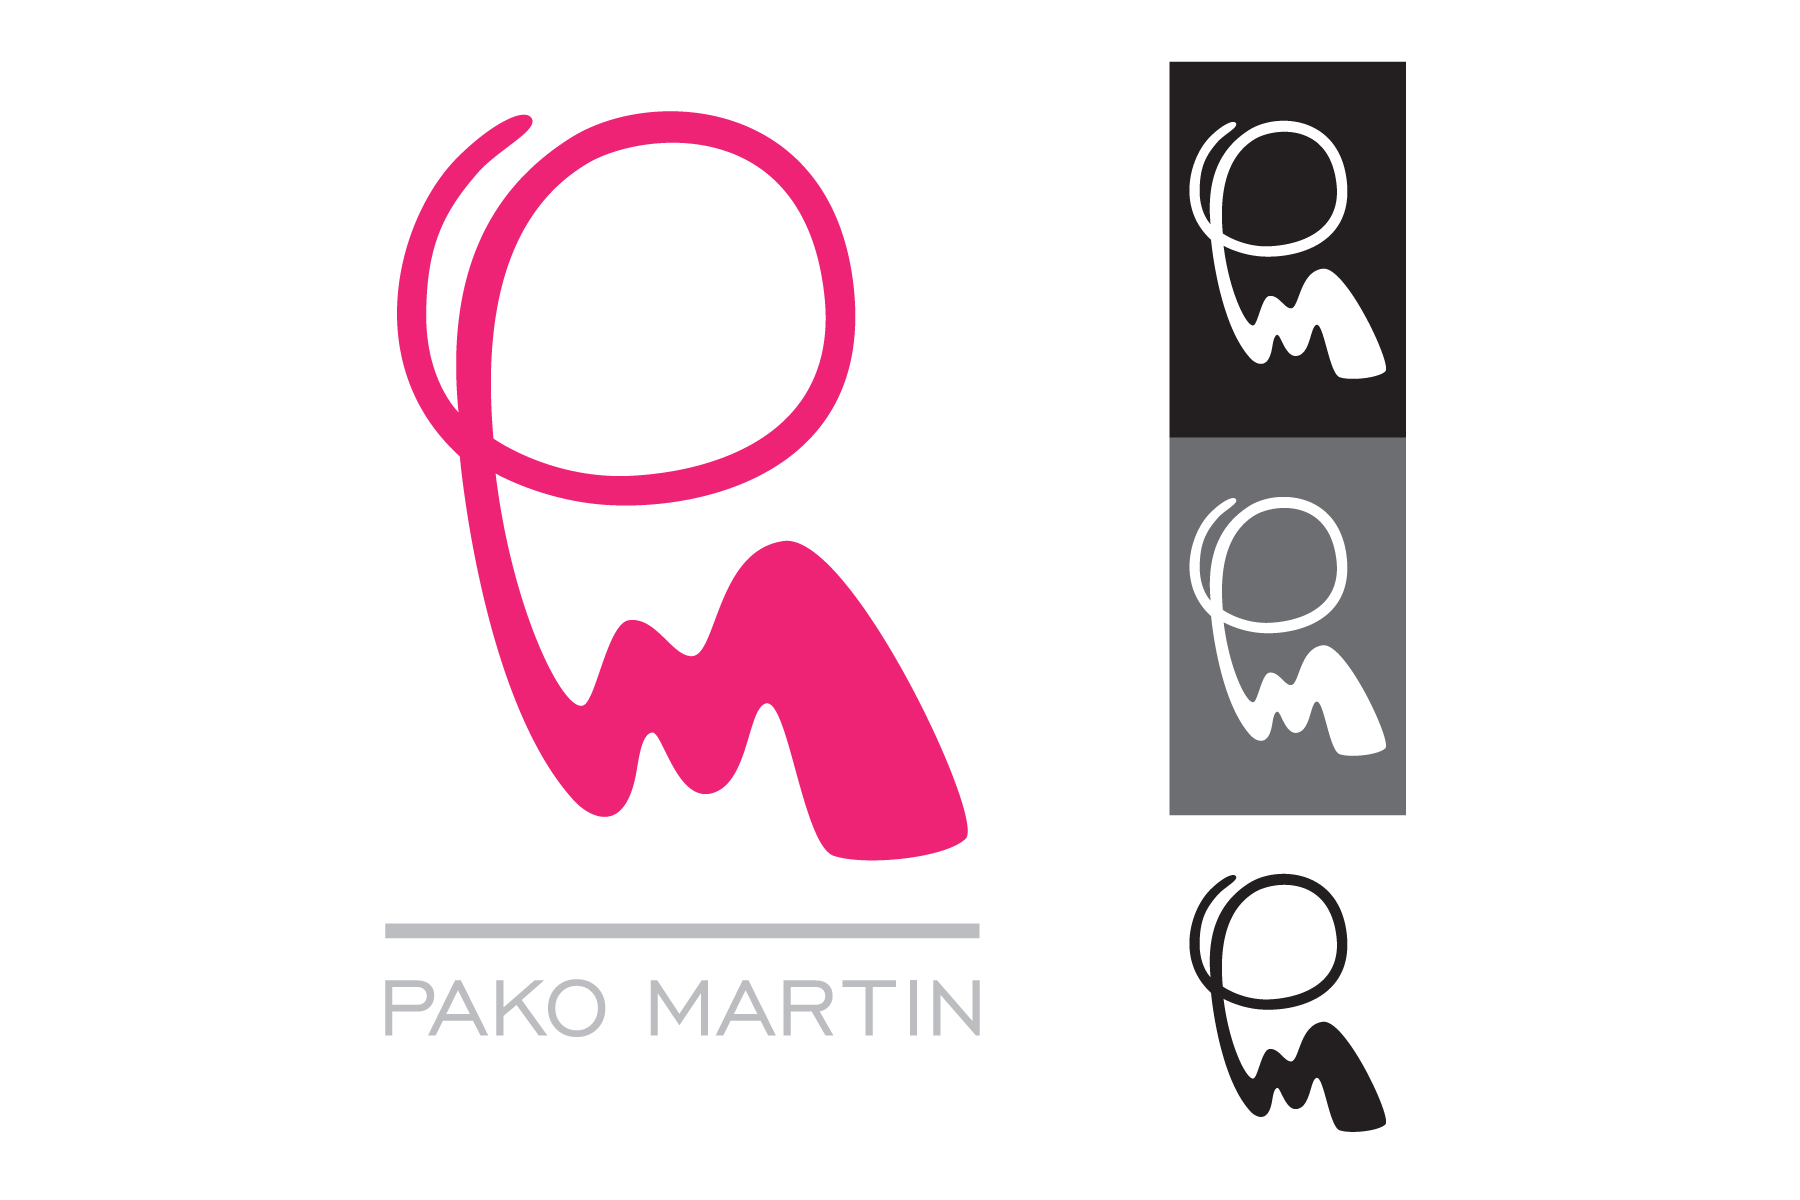 Pako Martin - Identity